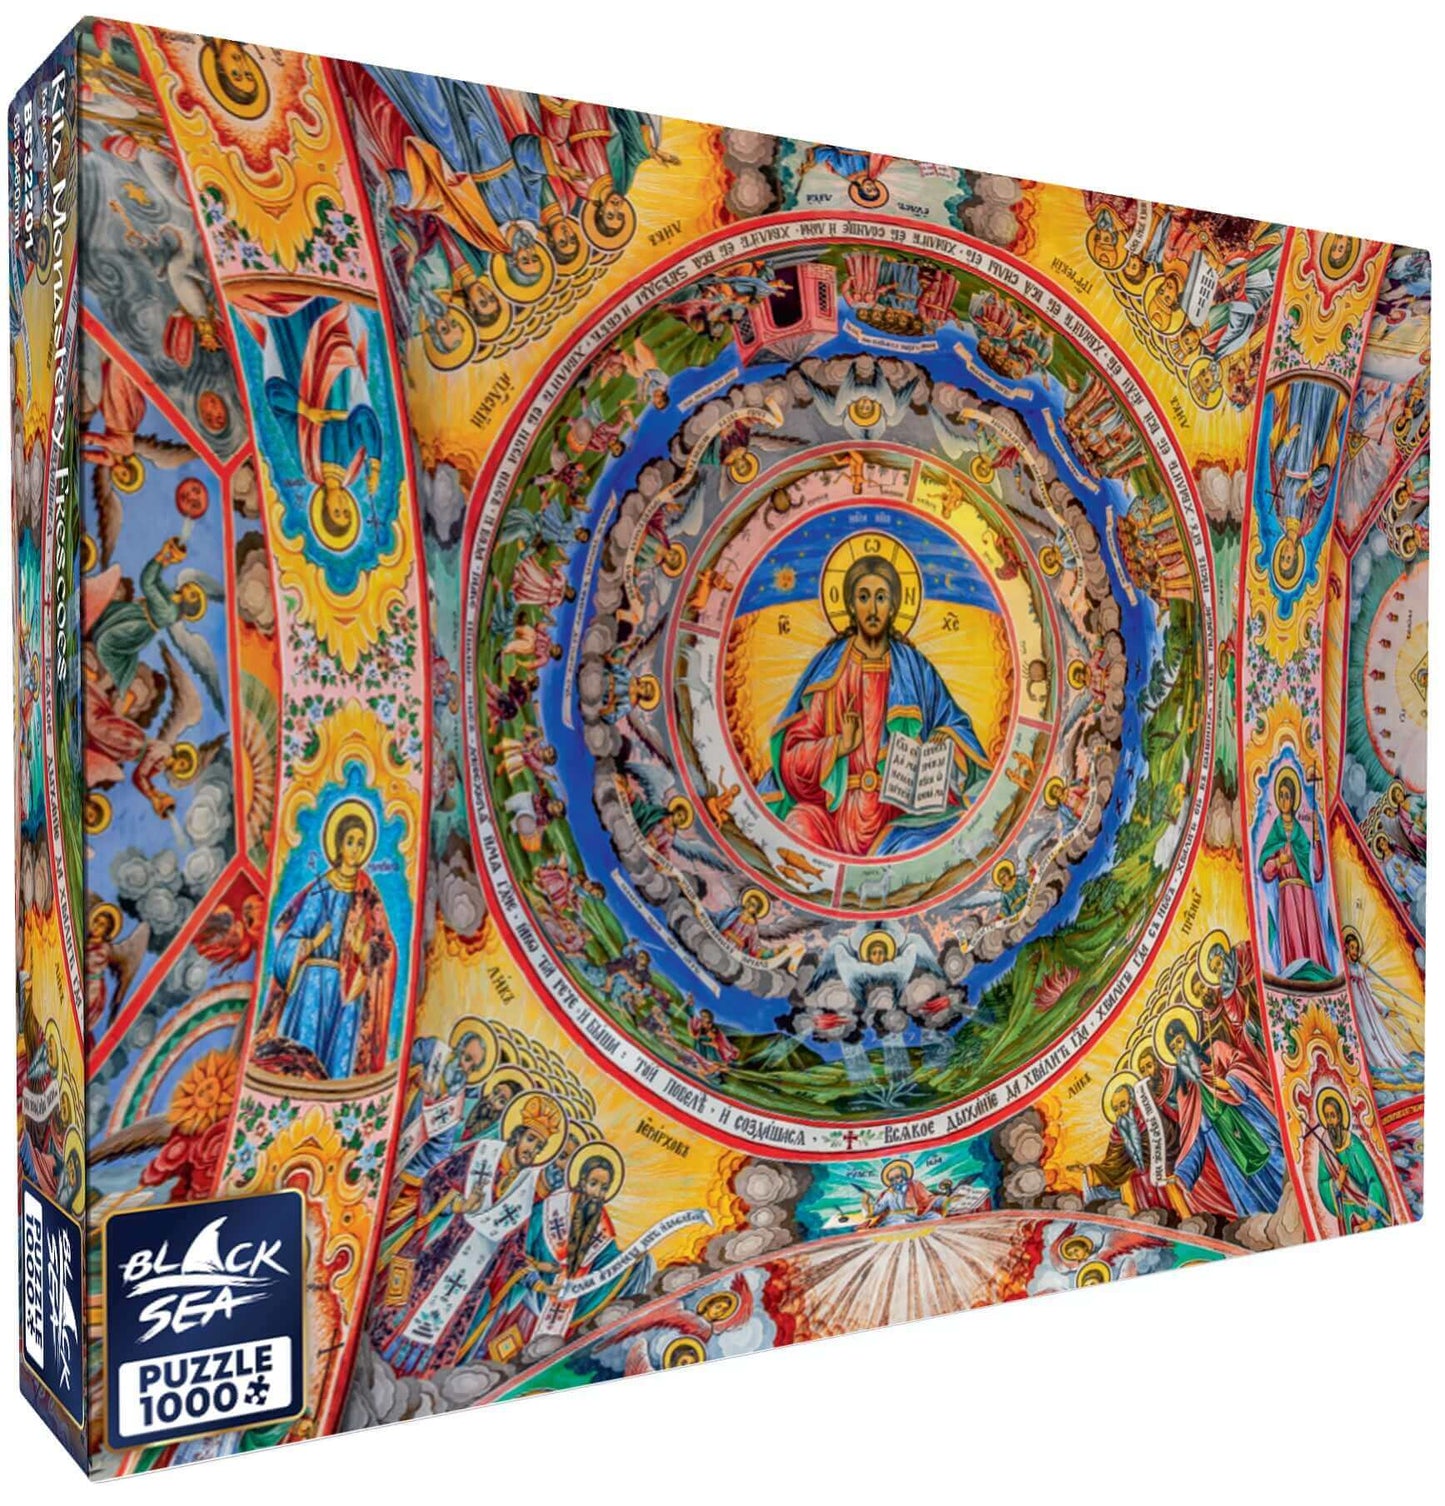 Puzzle Black Sea Premium 1000 pieces - Rila Monastery Frescoes